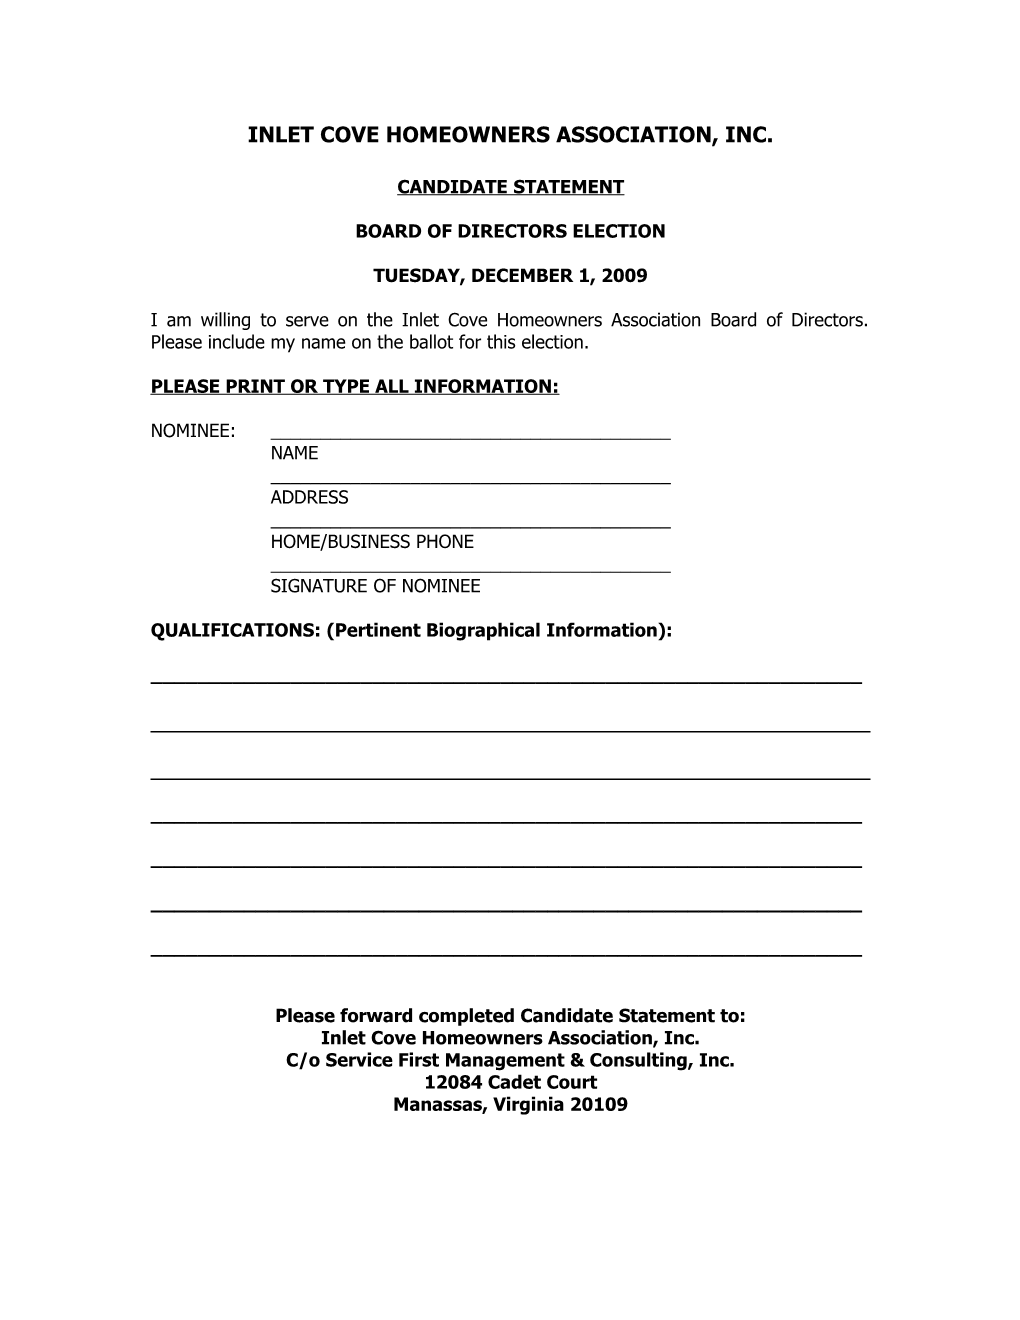 Crofton Commons Homeowners Association, Inc